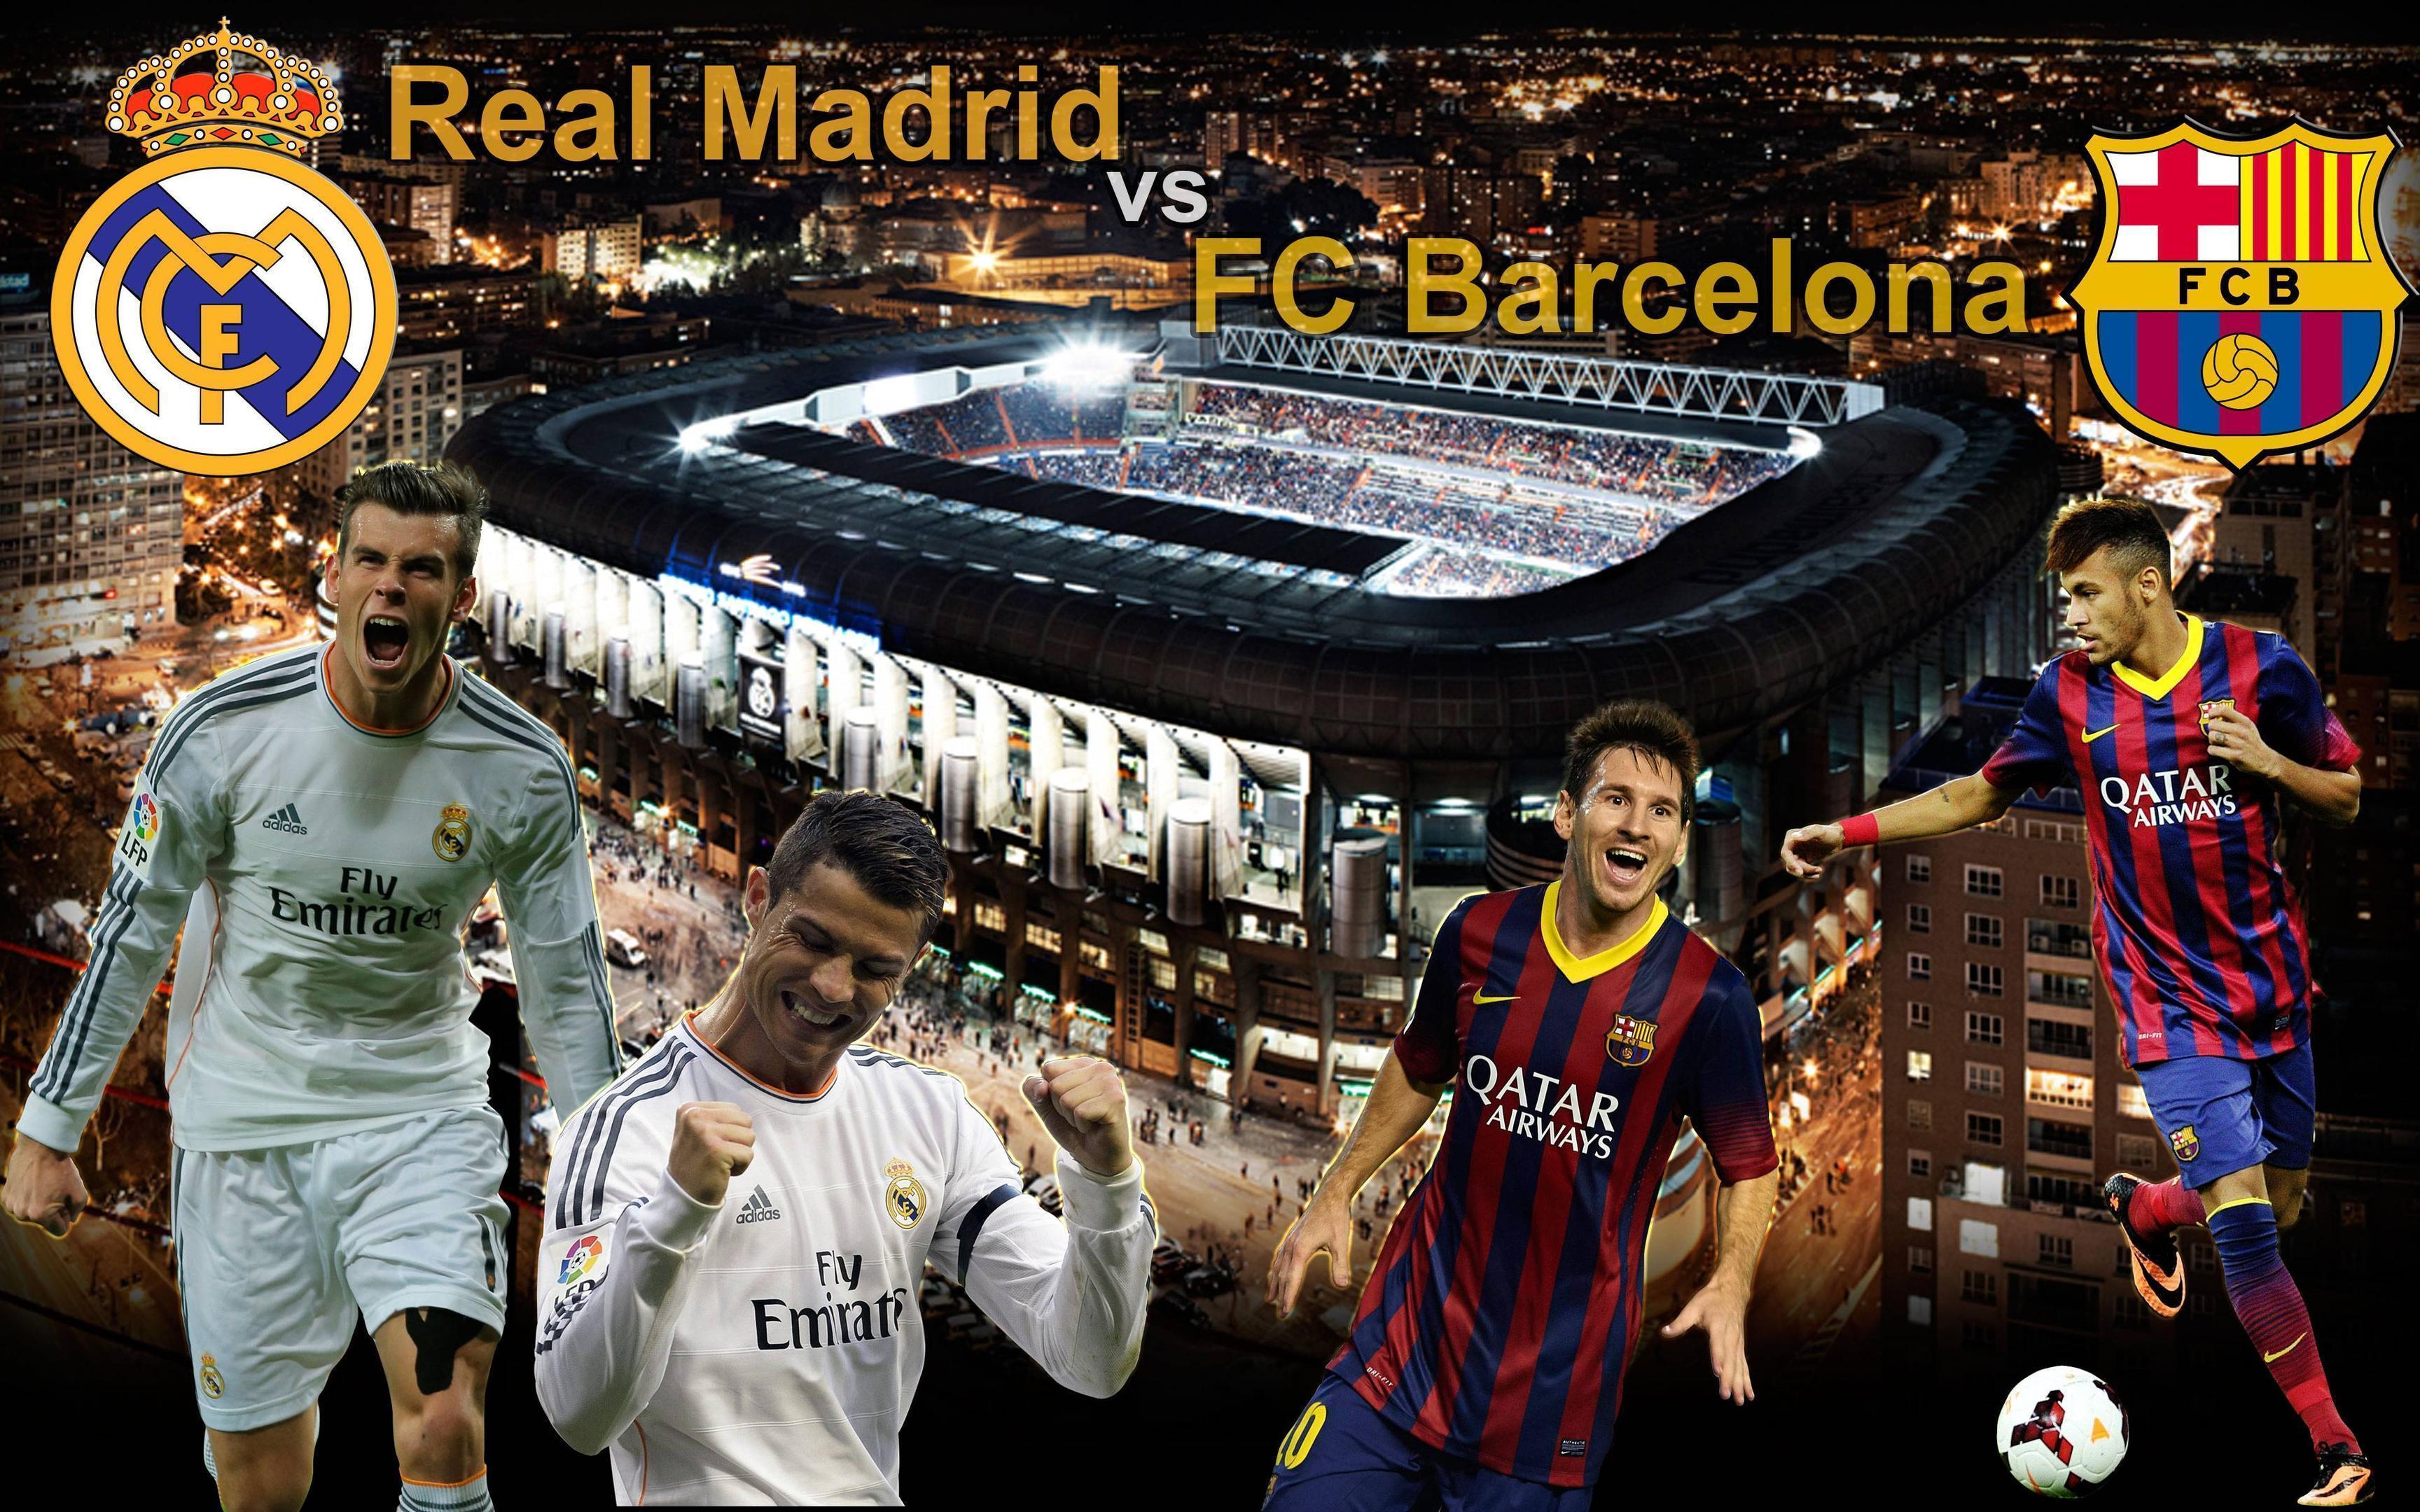 Real Madrid vs FC Barcelona 2014 Estadio Santiago Bernabeu Wide or